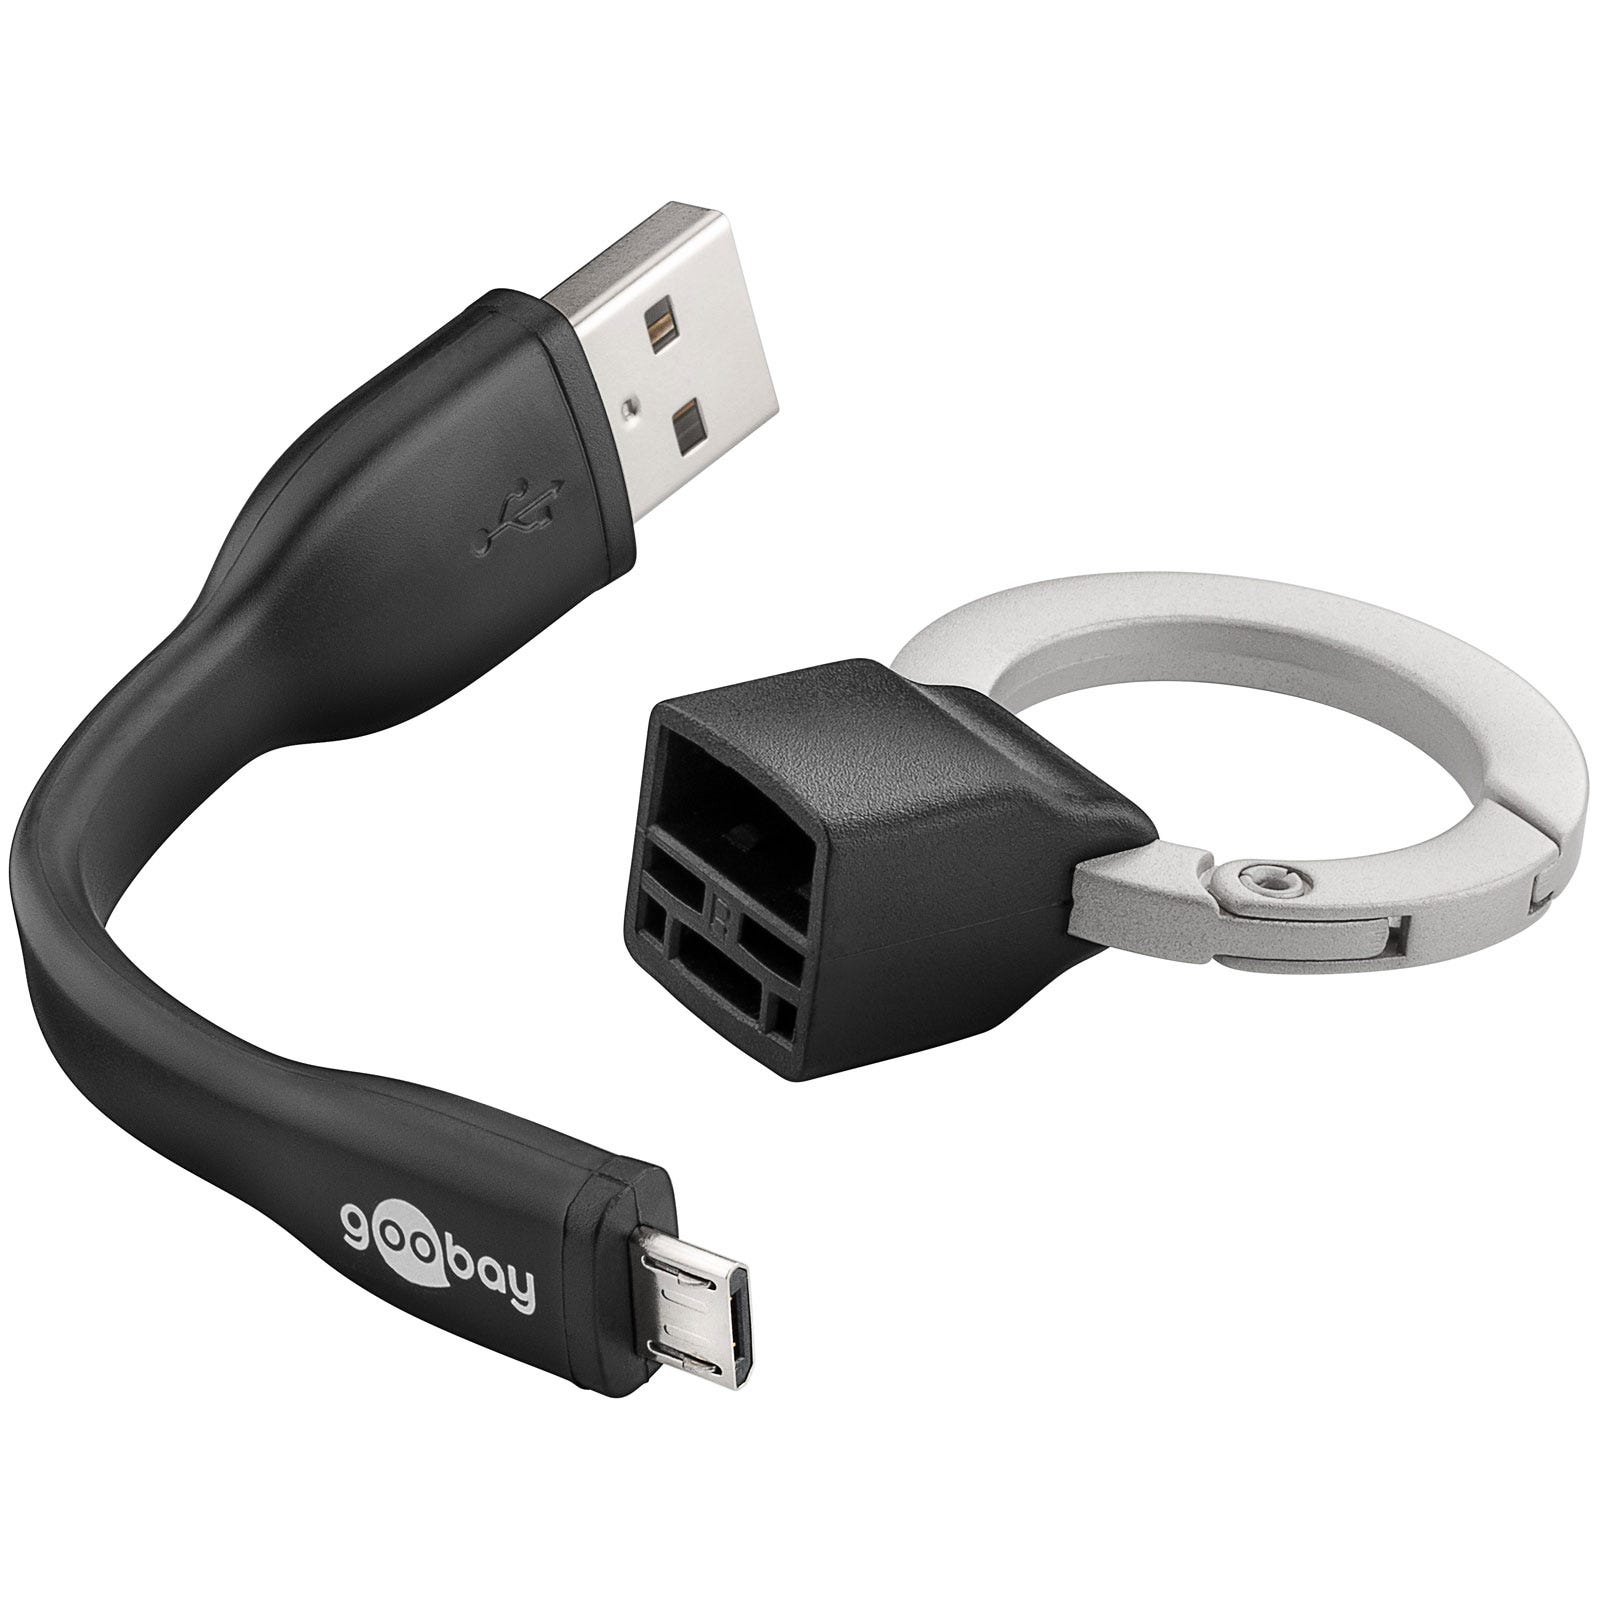 Chargeur double USB allume-cigare + câble